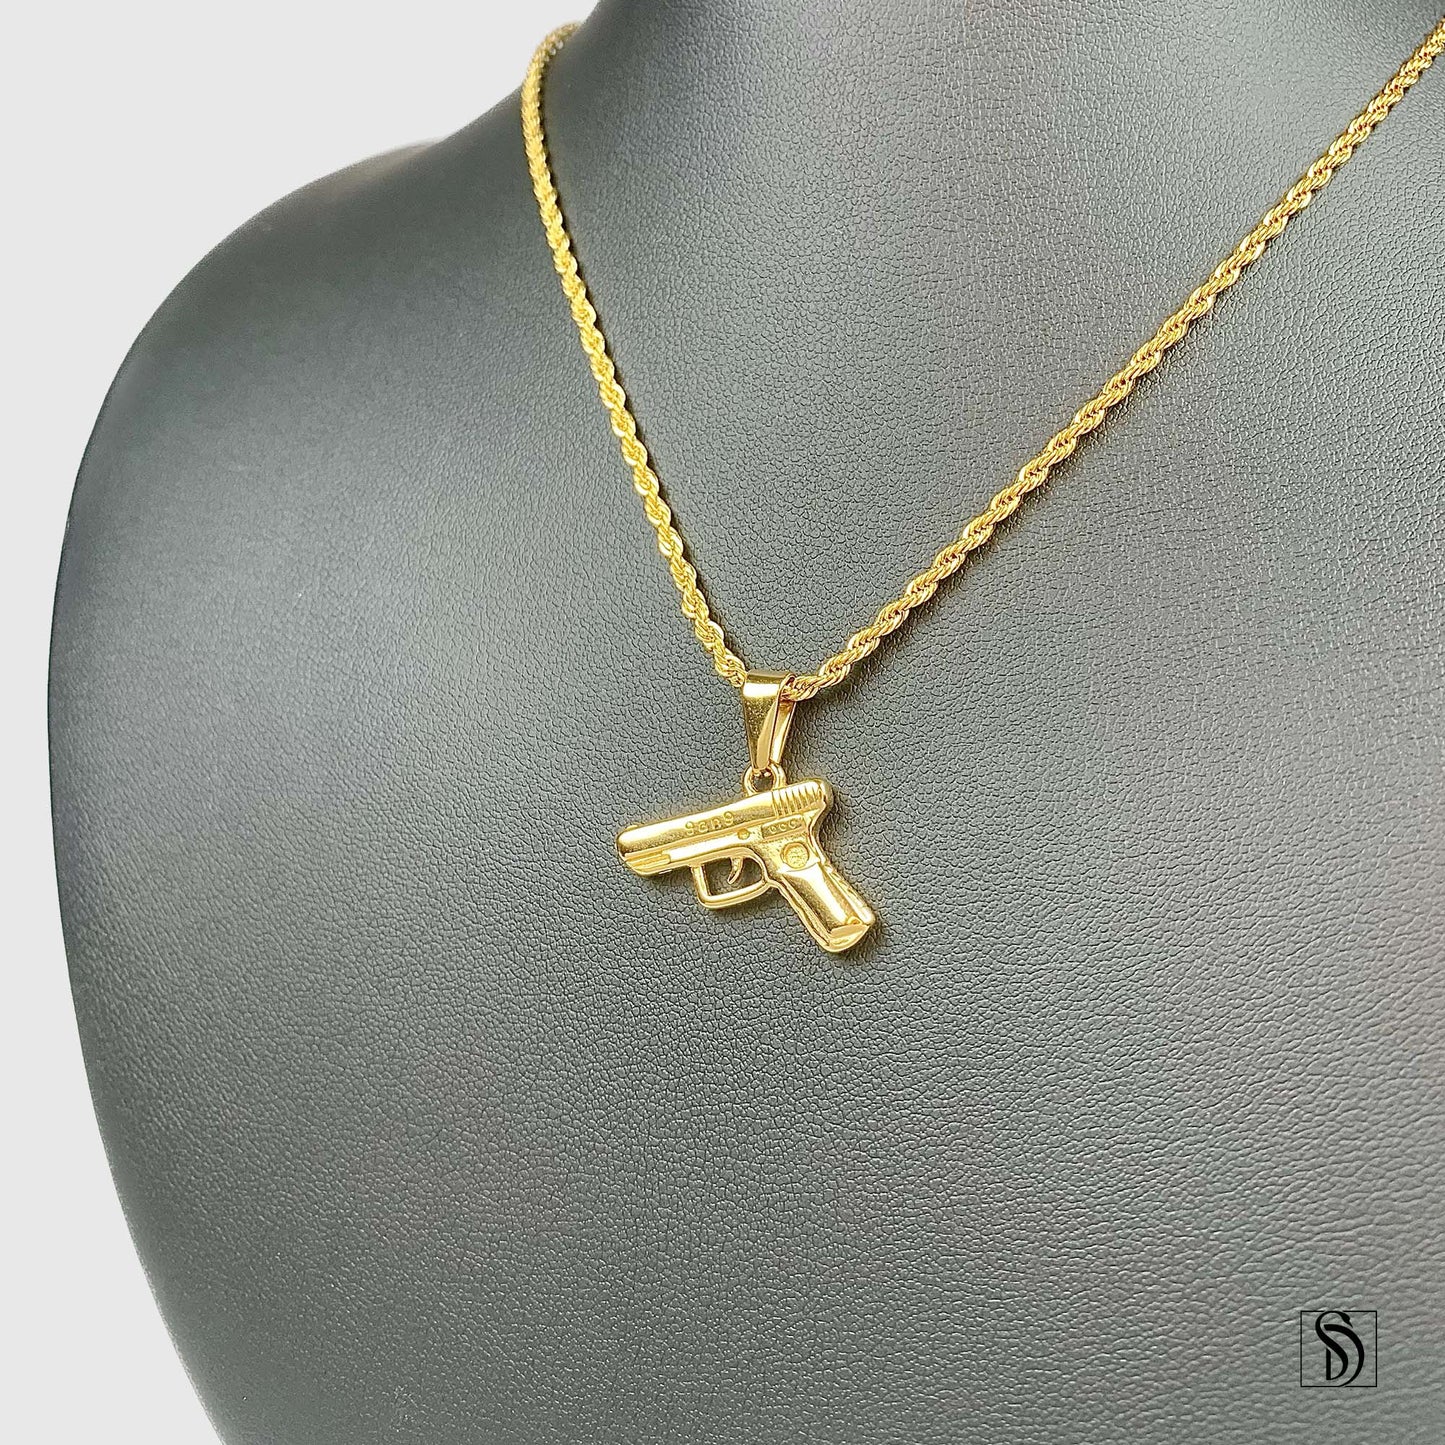 Gold 9mm Pistol Hand Gun Pendant Necklace